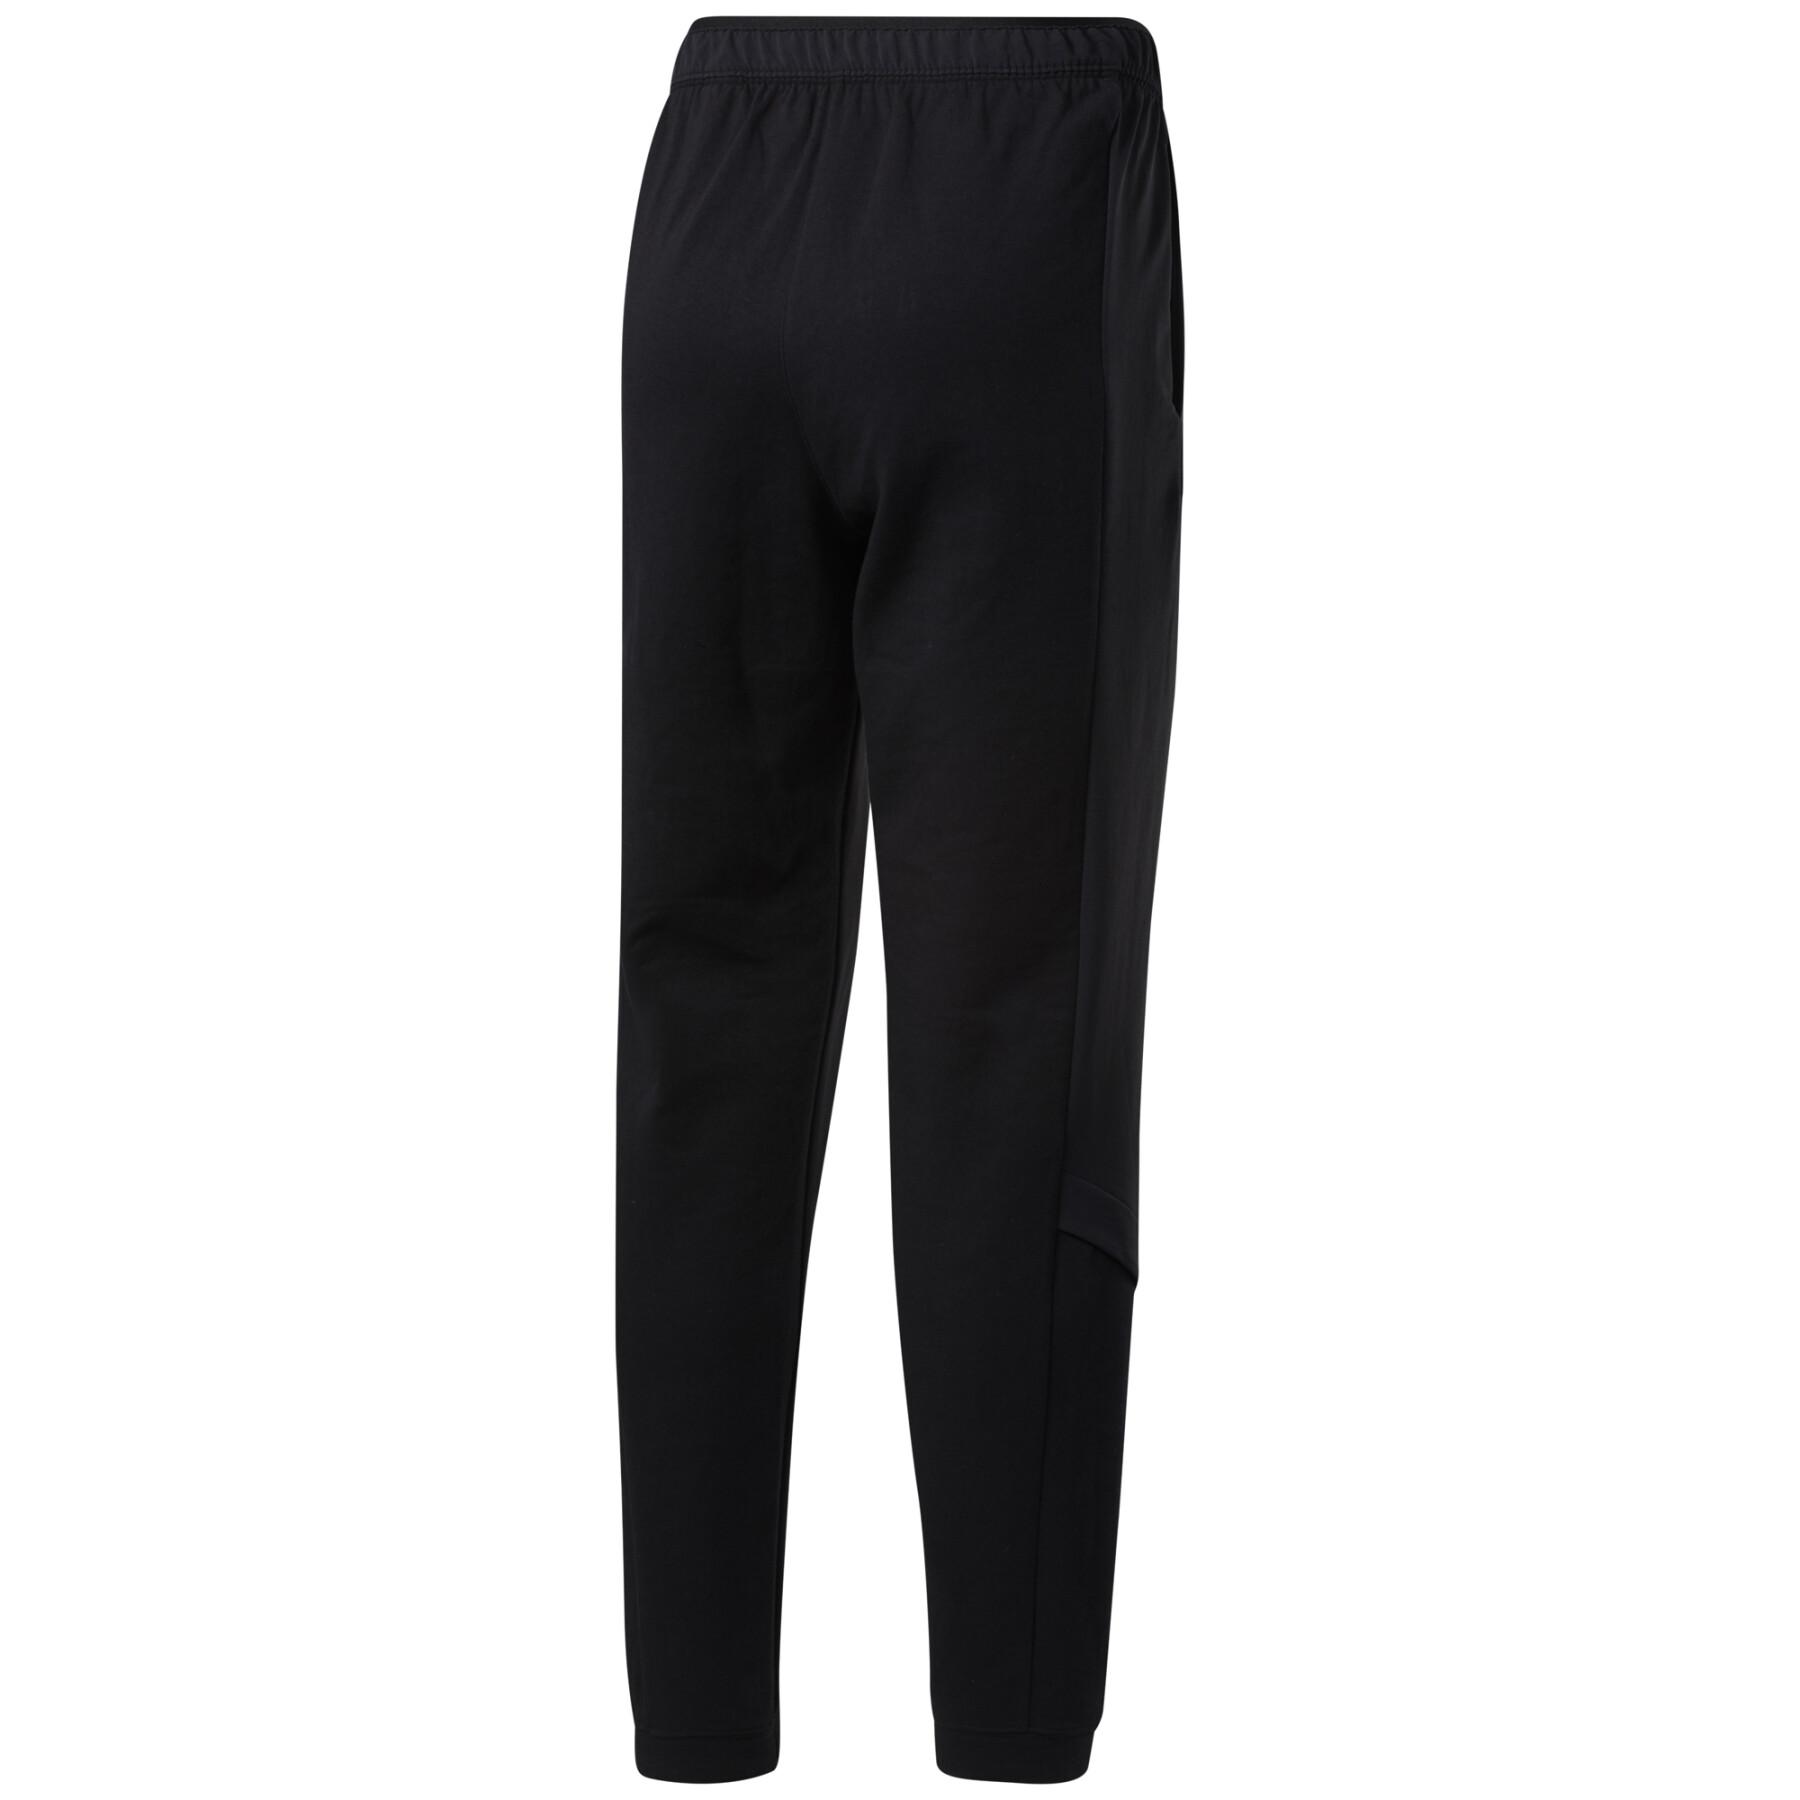 Women's trousers Reebok Les Mills® Athlete